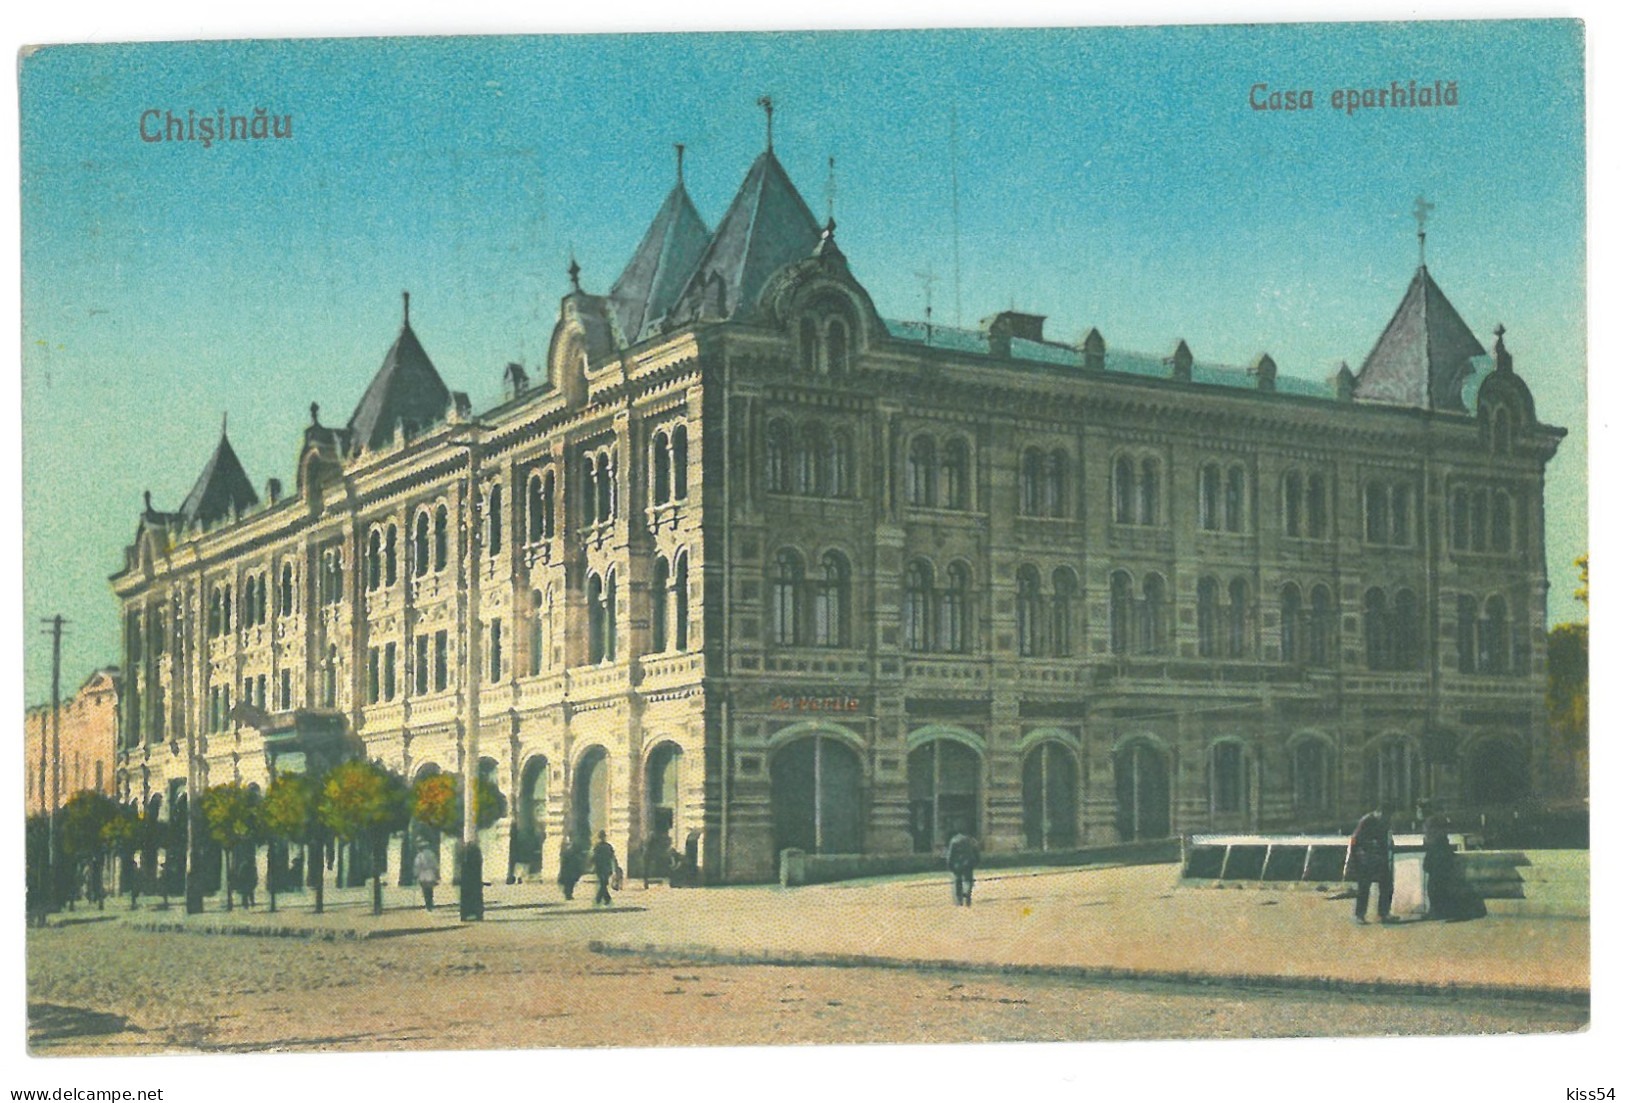 MOL 1 - 16270 CHISINAU, Casa Eparhiala, Moldova - Old Postcard - Used - 1925 - Moldova